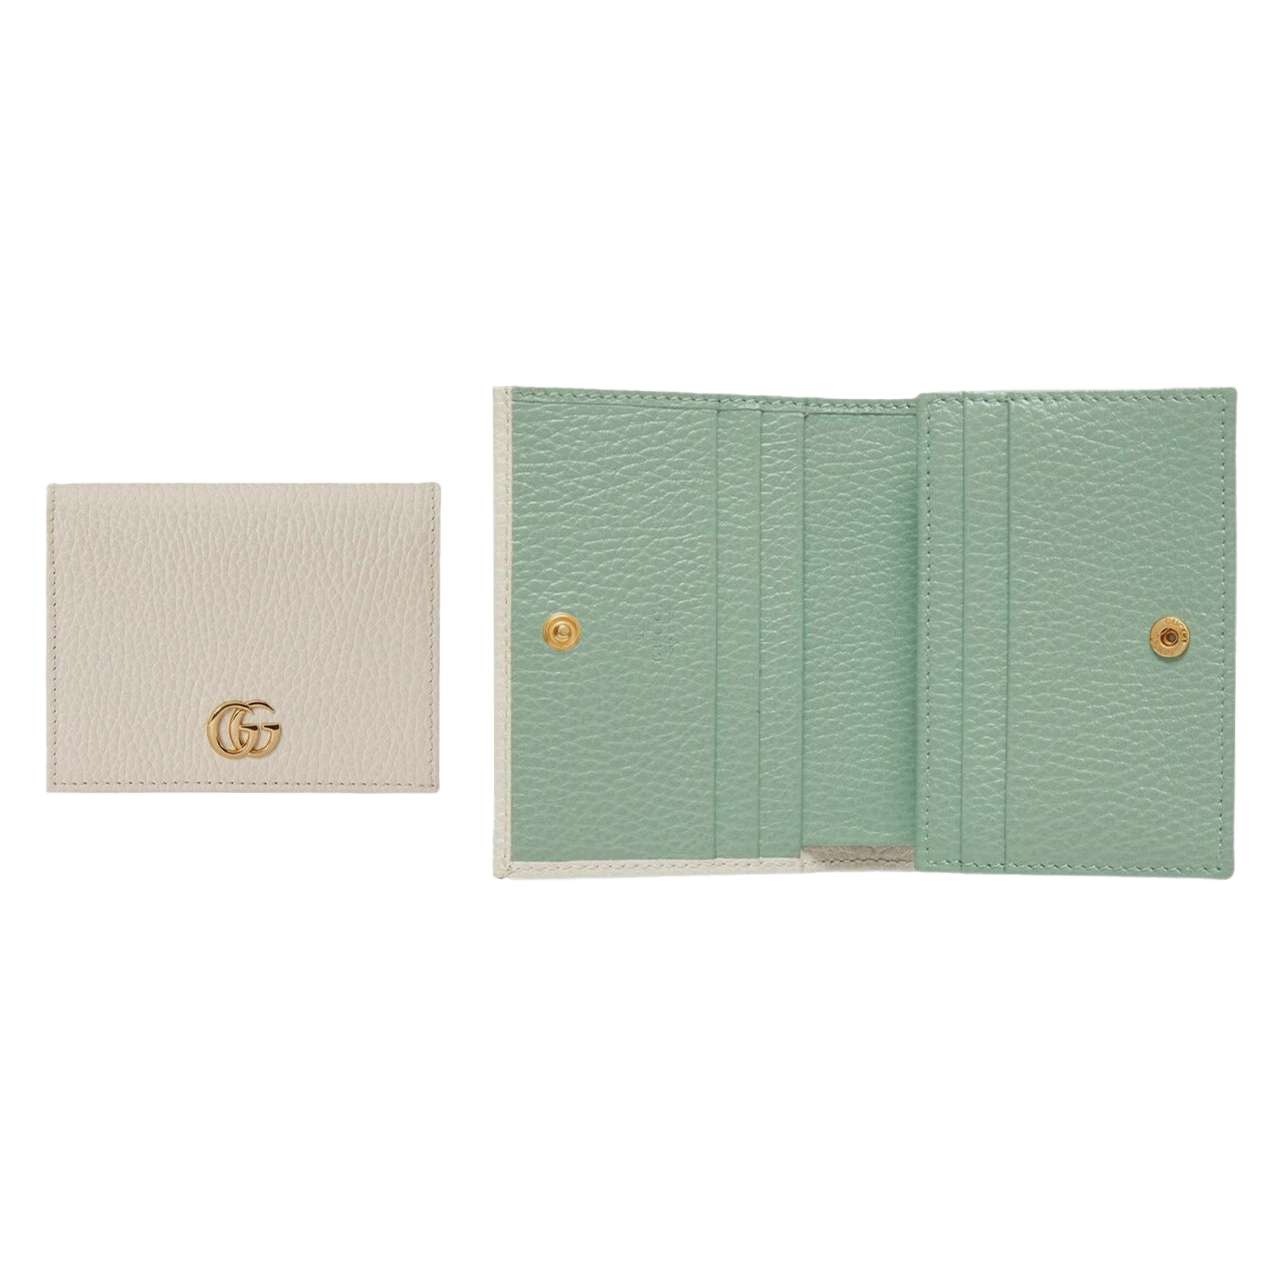 Gucci GG card case wallet